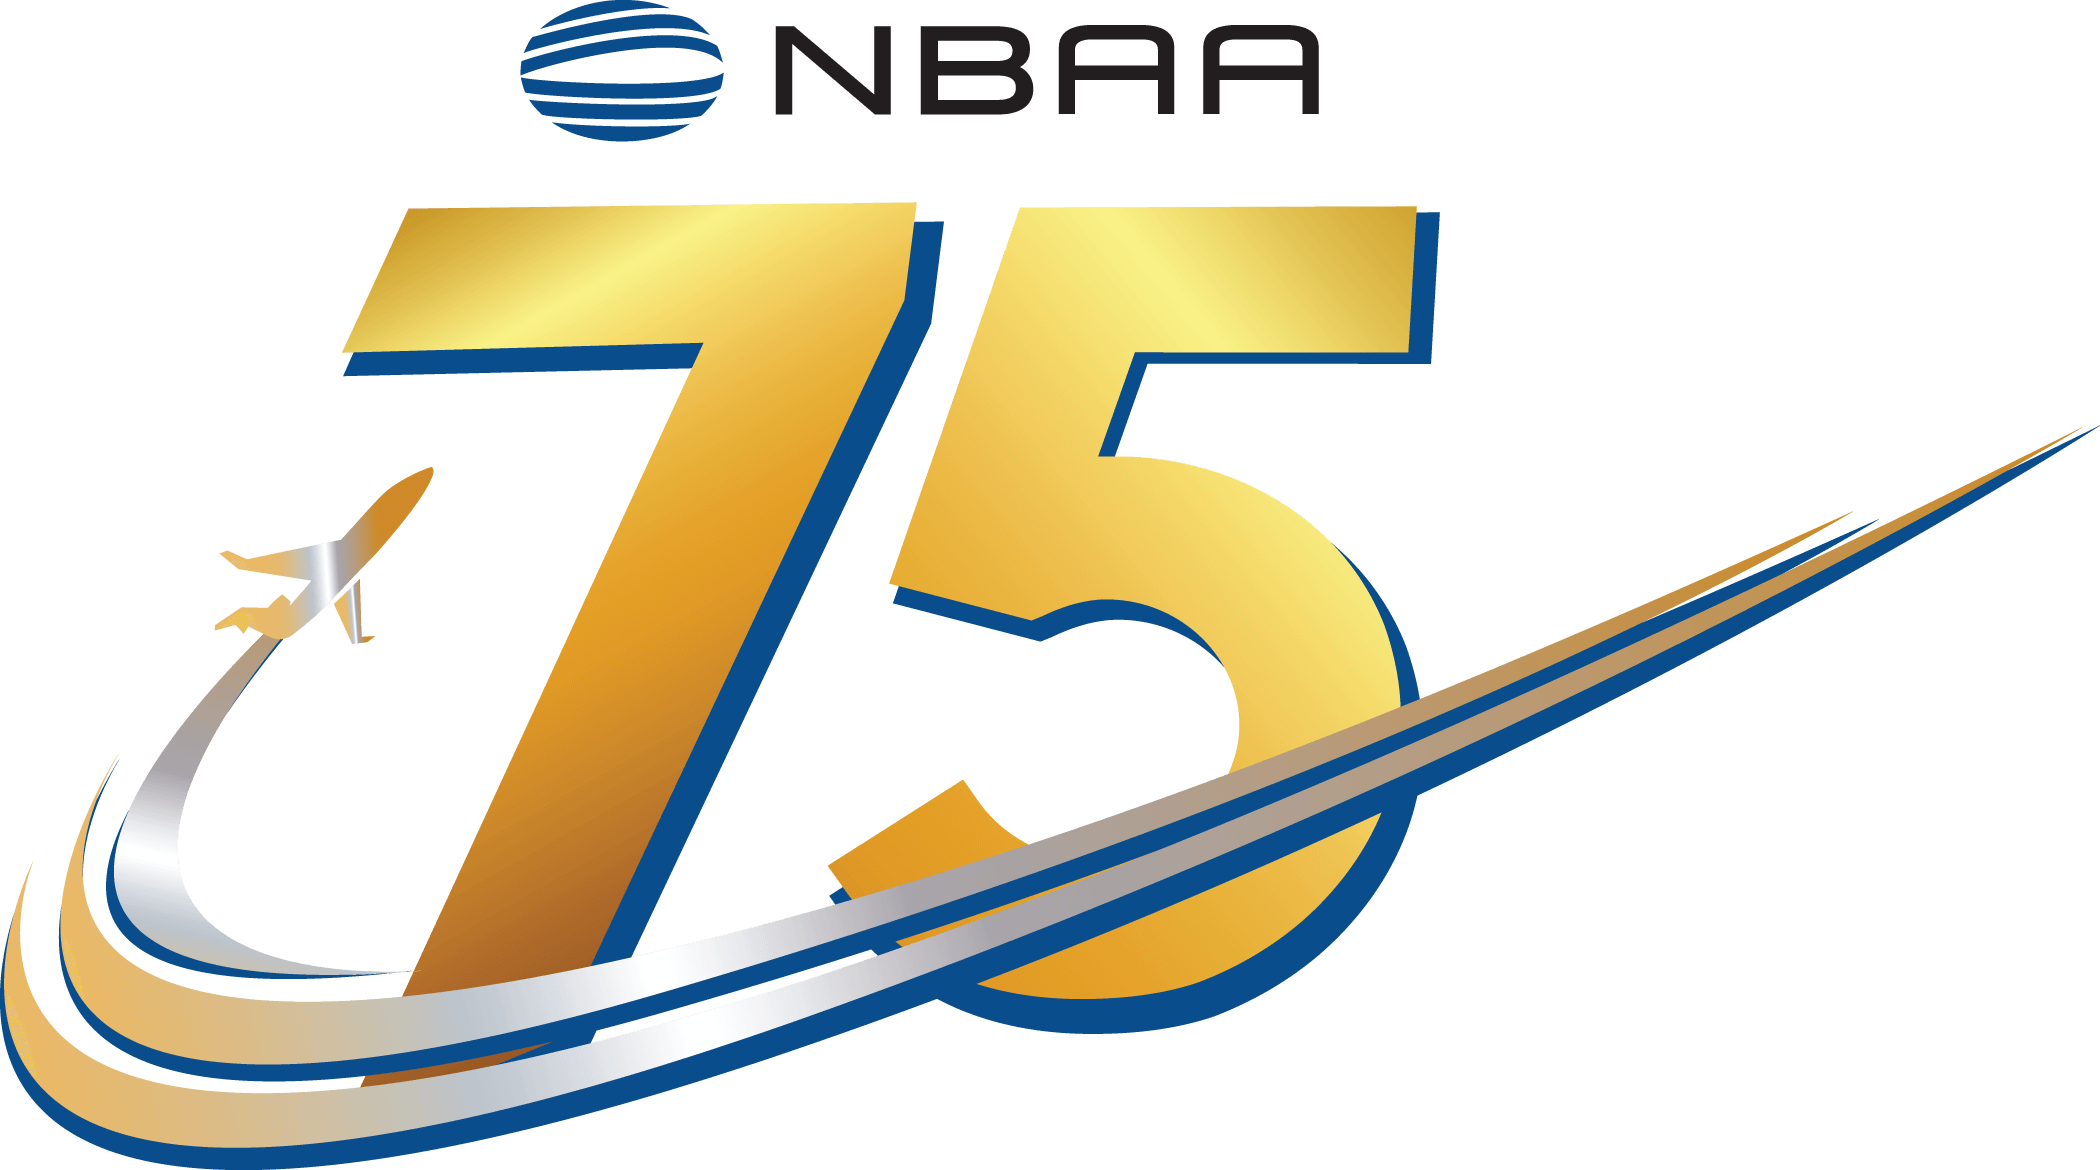 NBAA 75th Anniversary